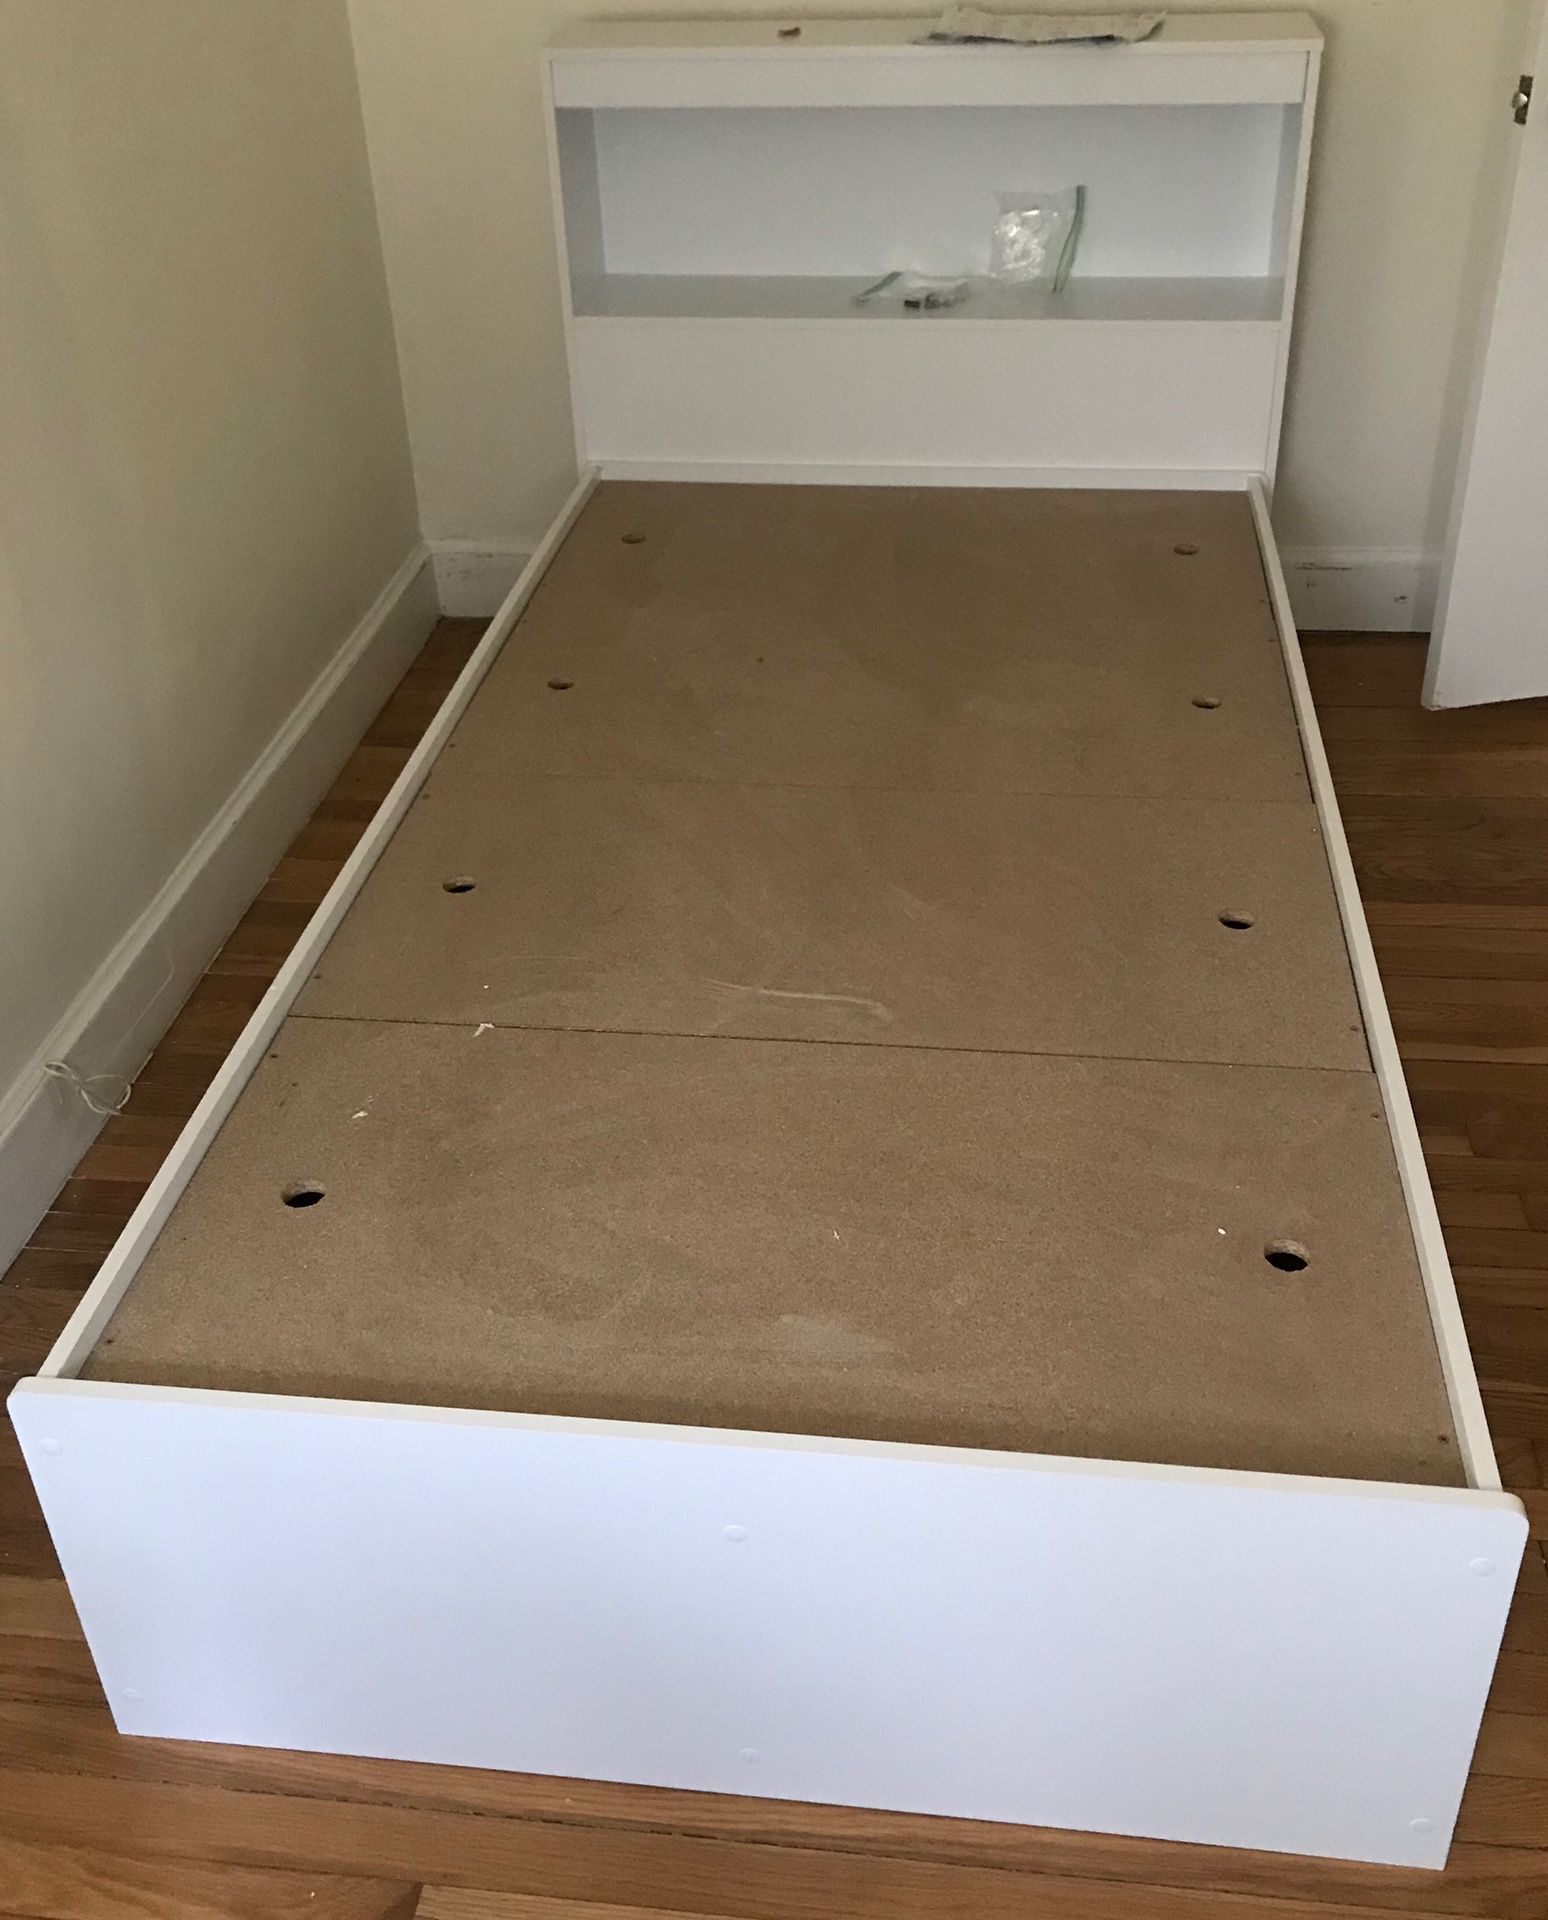 New twin sized platform bed with storage